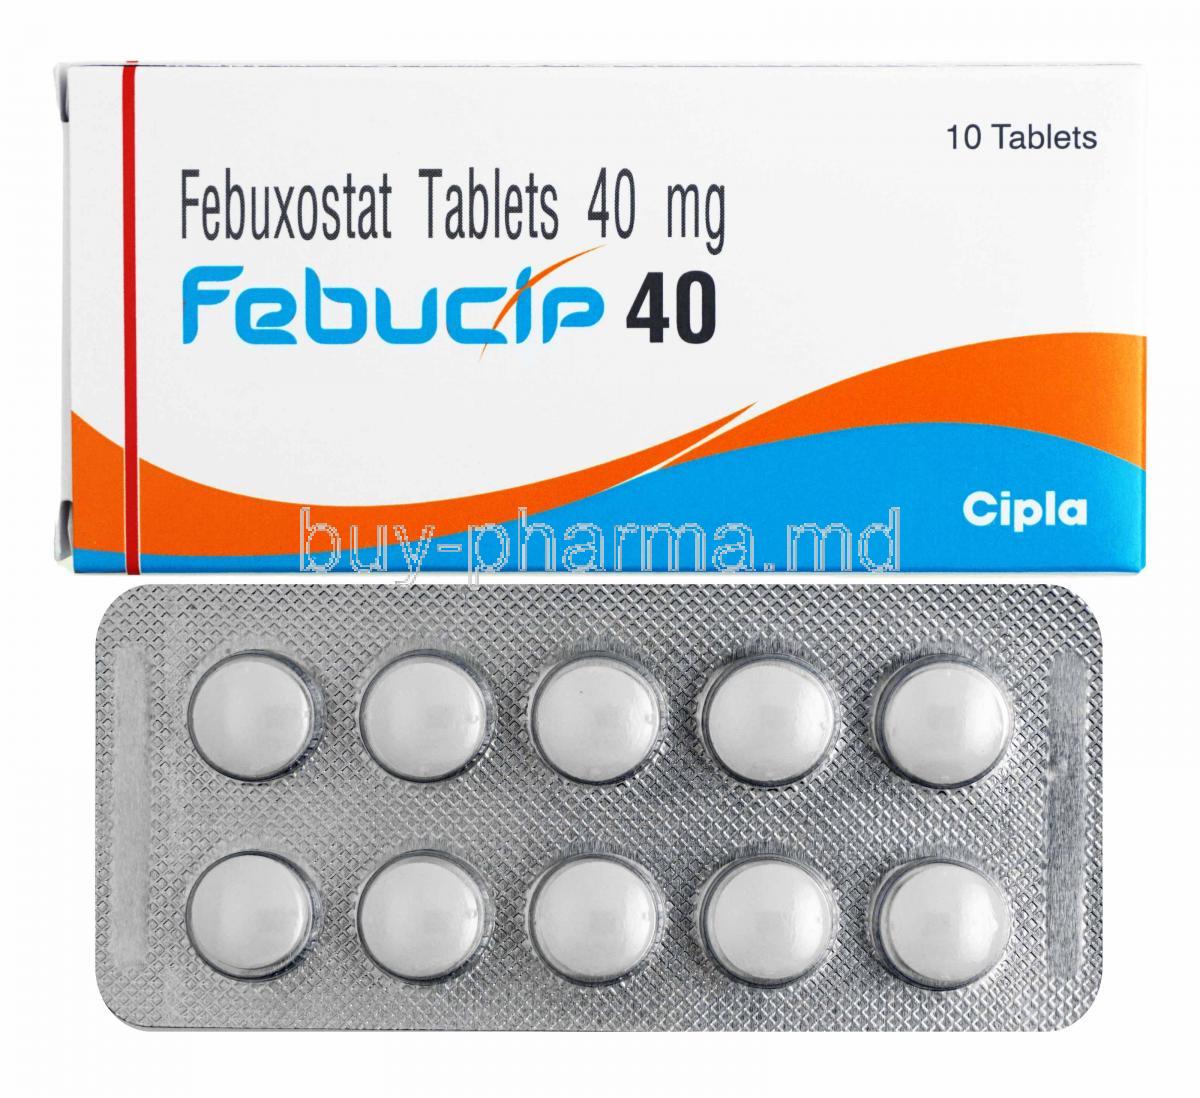 Febucip, Febuxostat 40mg box and tablets